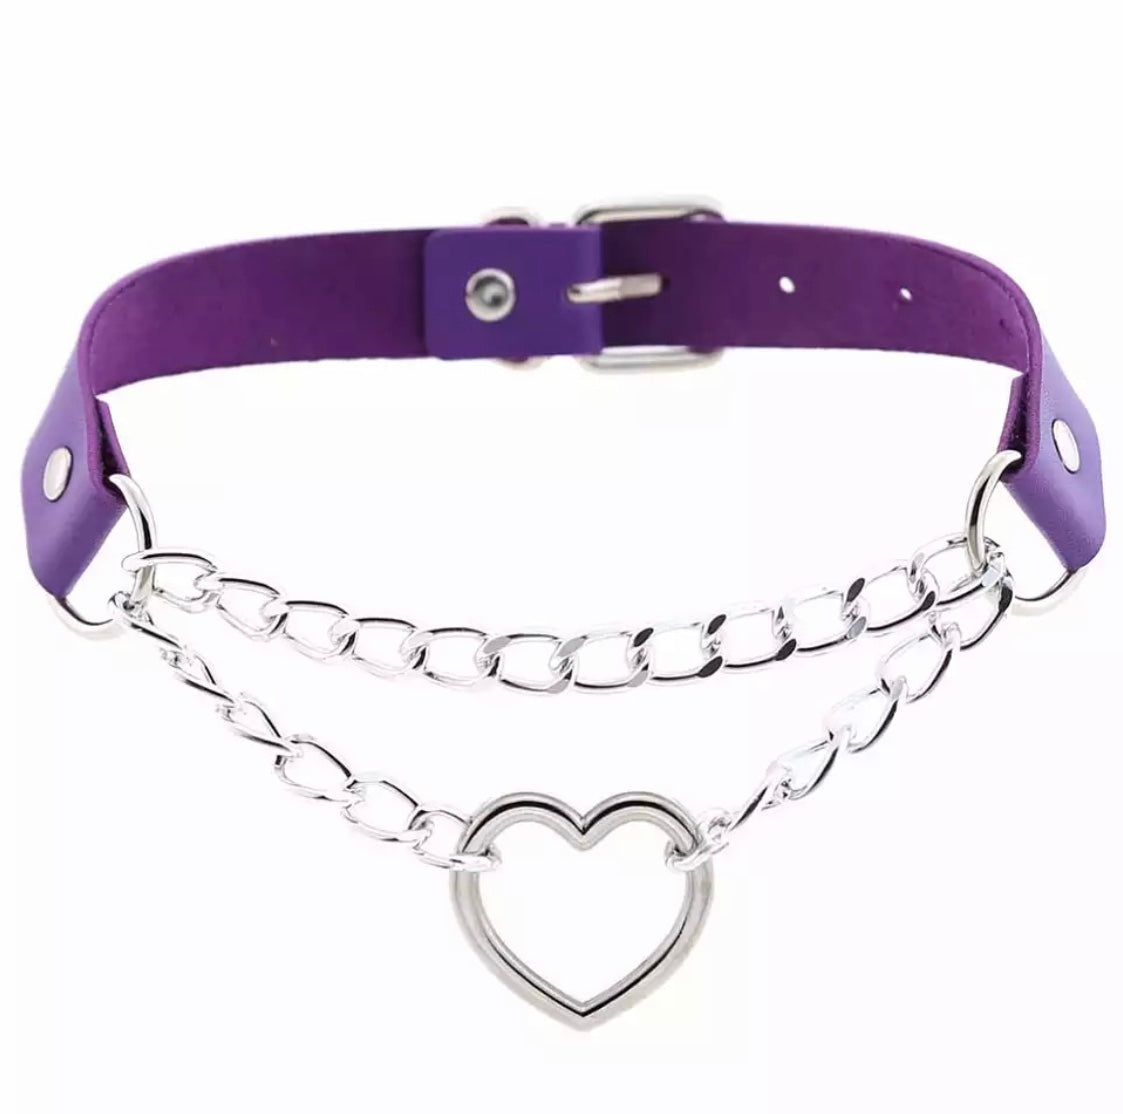 DDLGVERSE Vegan Leather Heart Chain Collar Purple